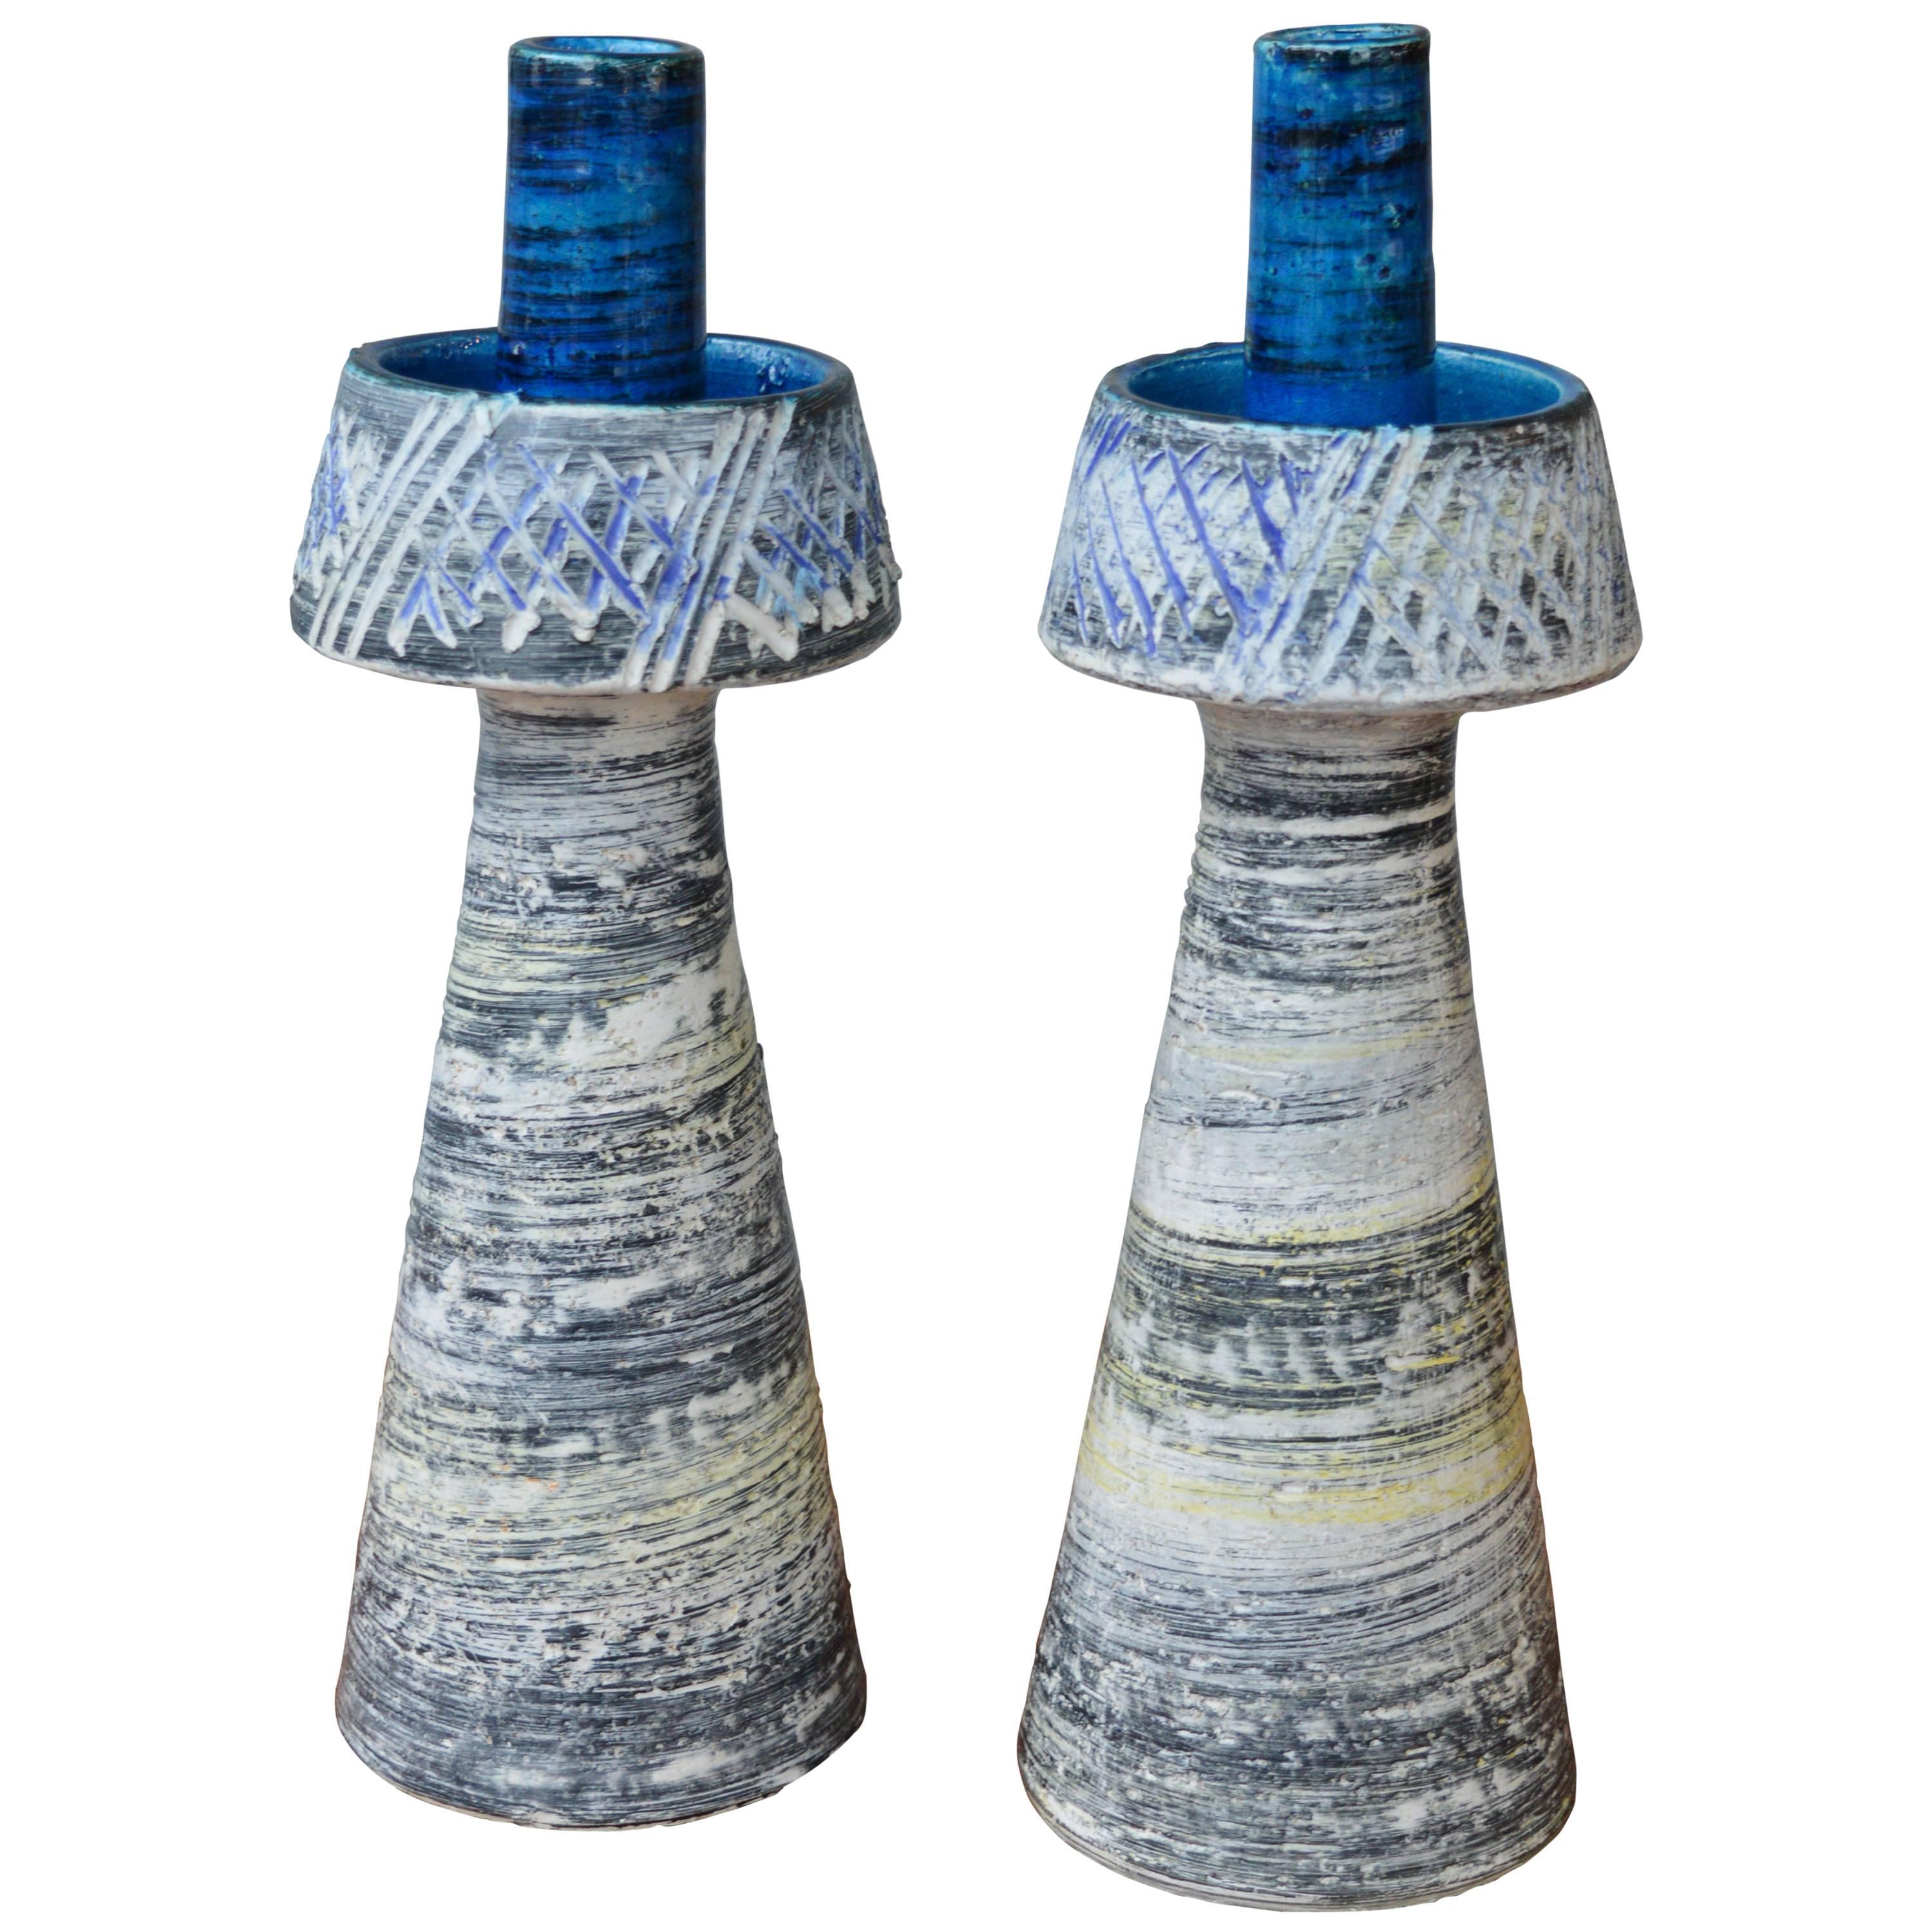 Aldo Londi/Bitossi Pair Italian Rimini Blue Candle Sticks